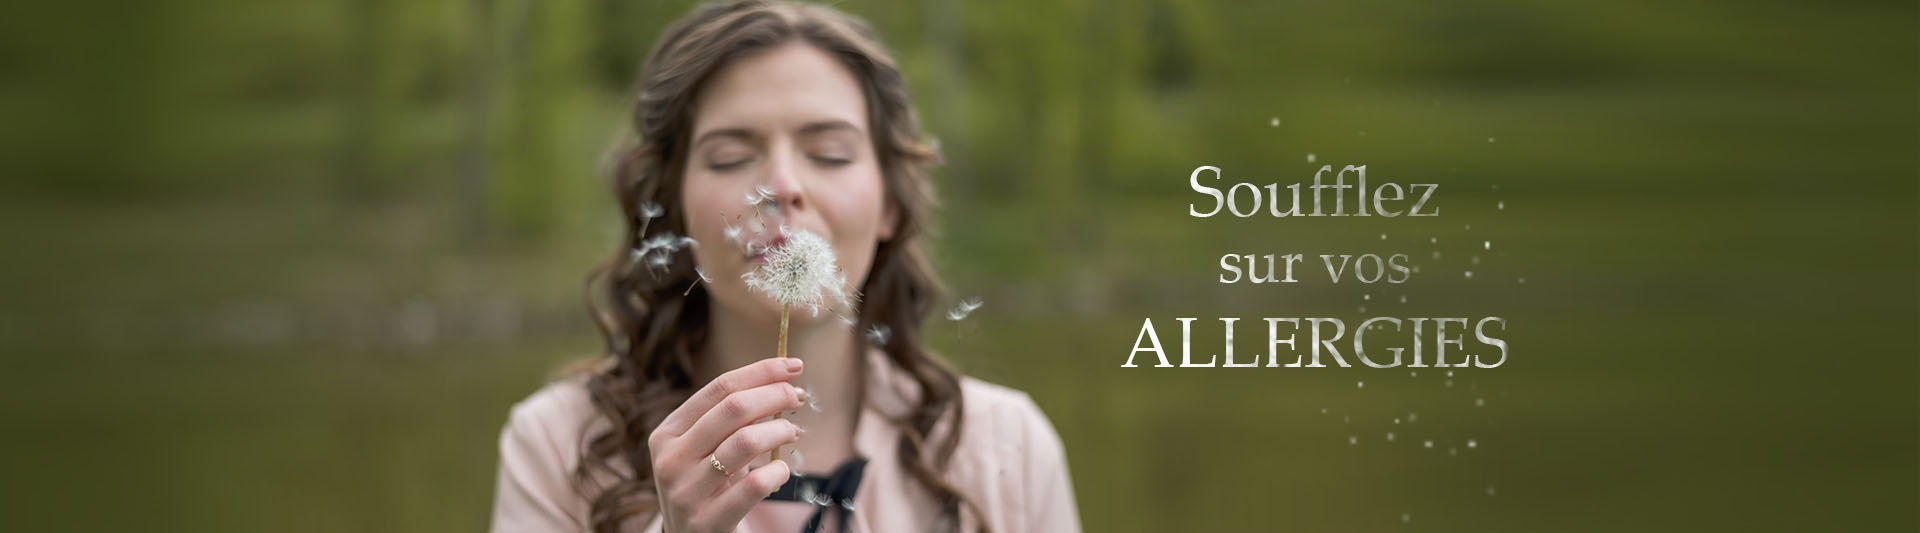 Soufflez sur vos allergies